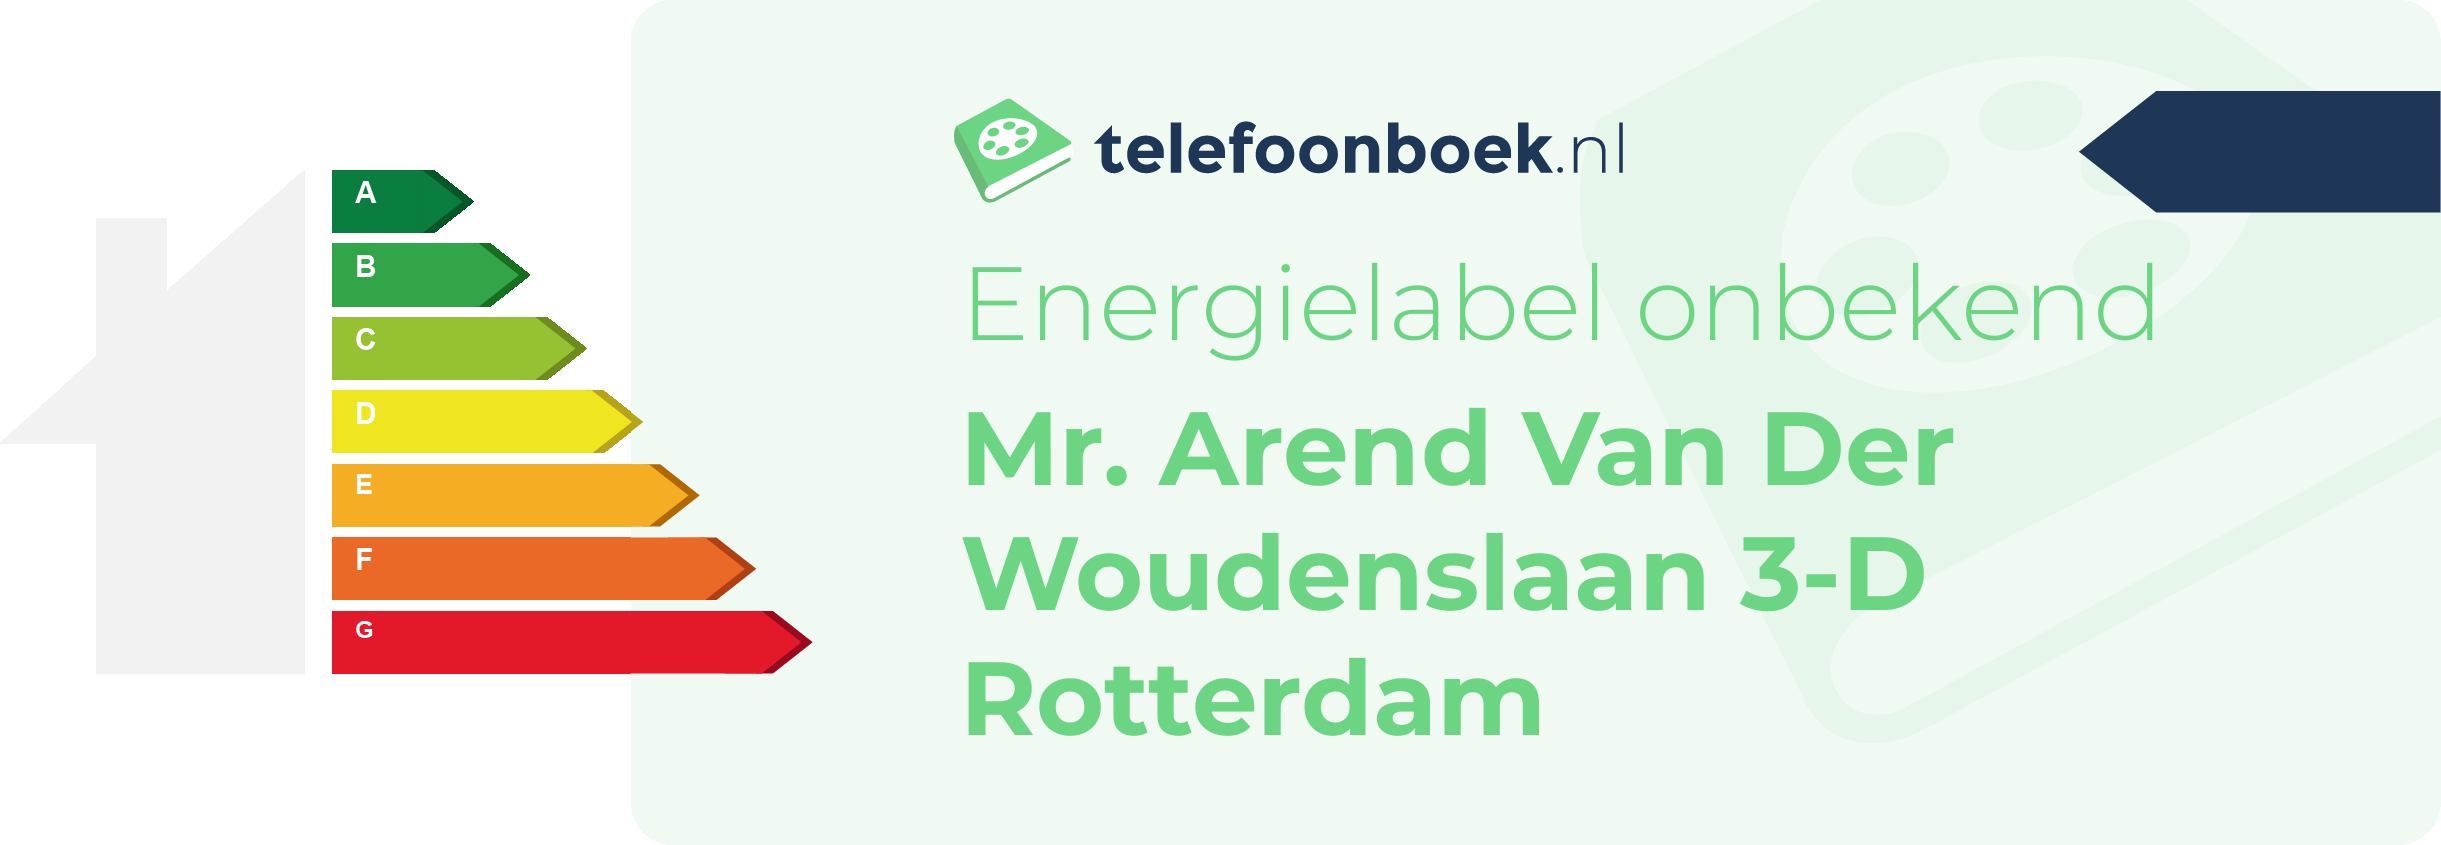 Energielabel Mr. Arend Van Der Woudenslaan 3-D Rotterdam